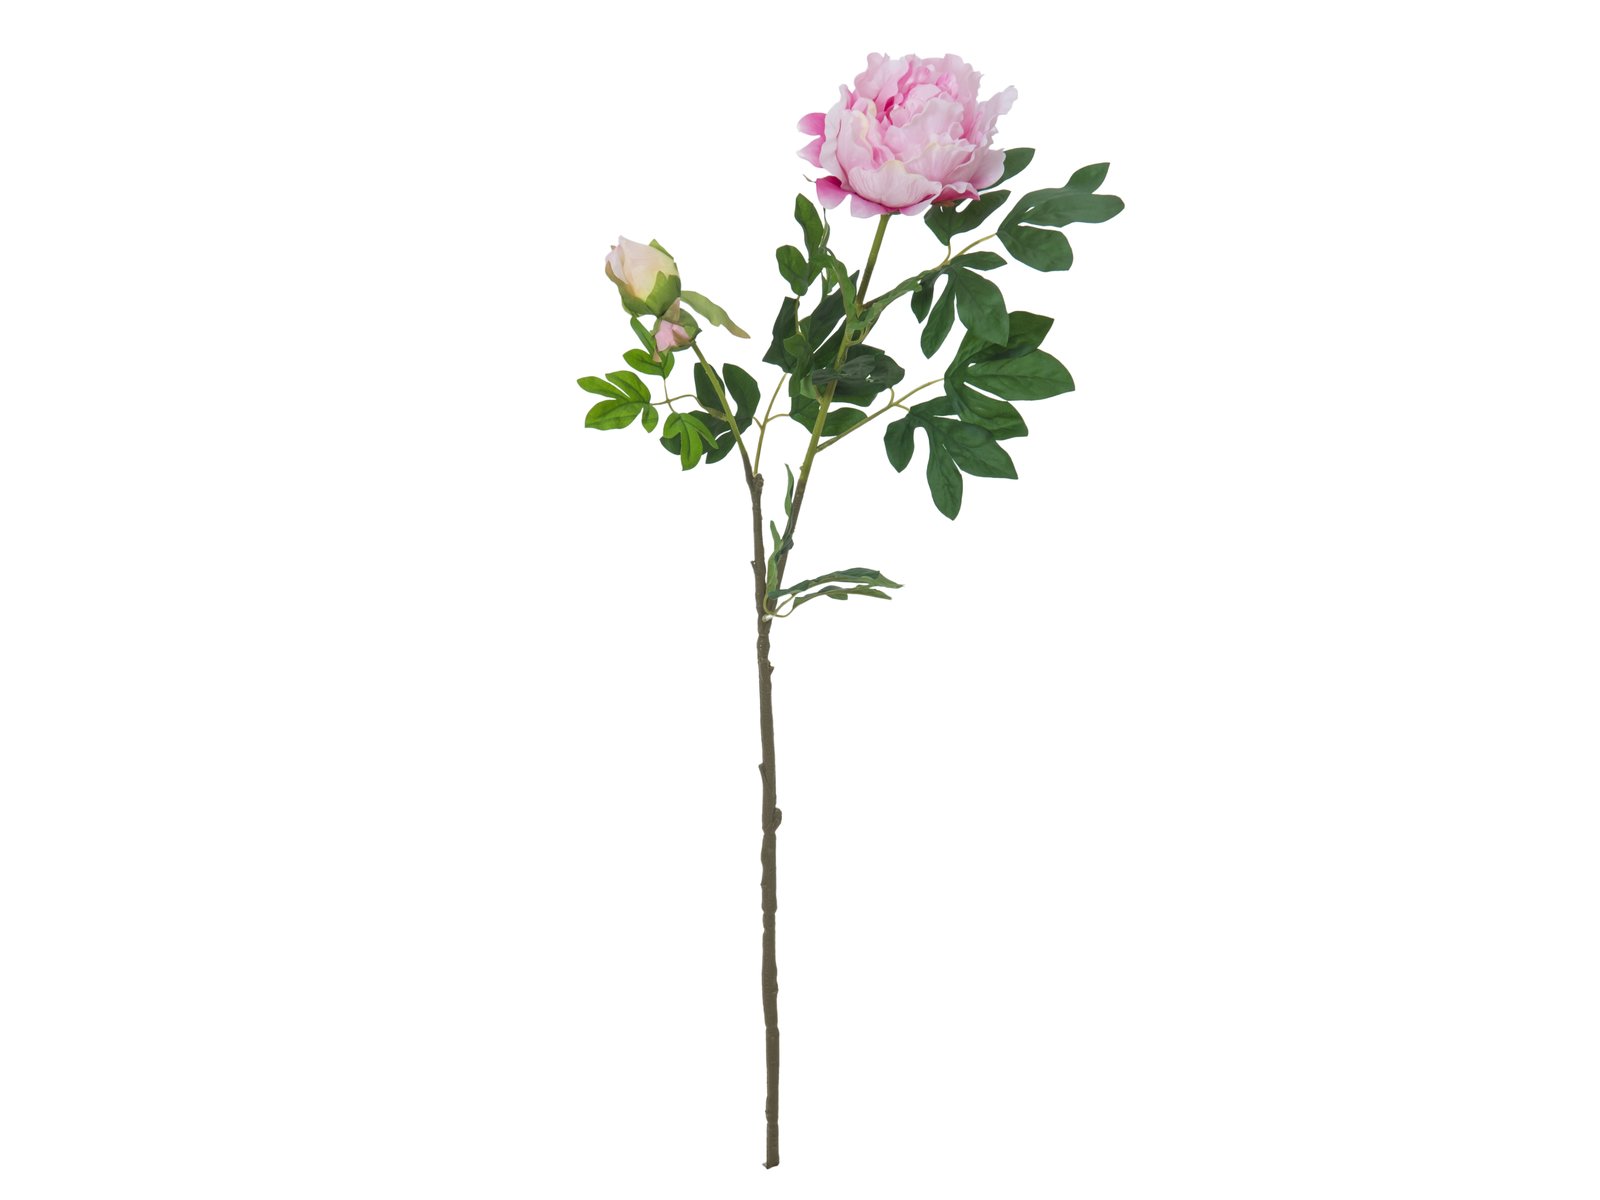 Pelargonie růžová deluxe, 100 cm